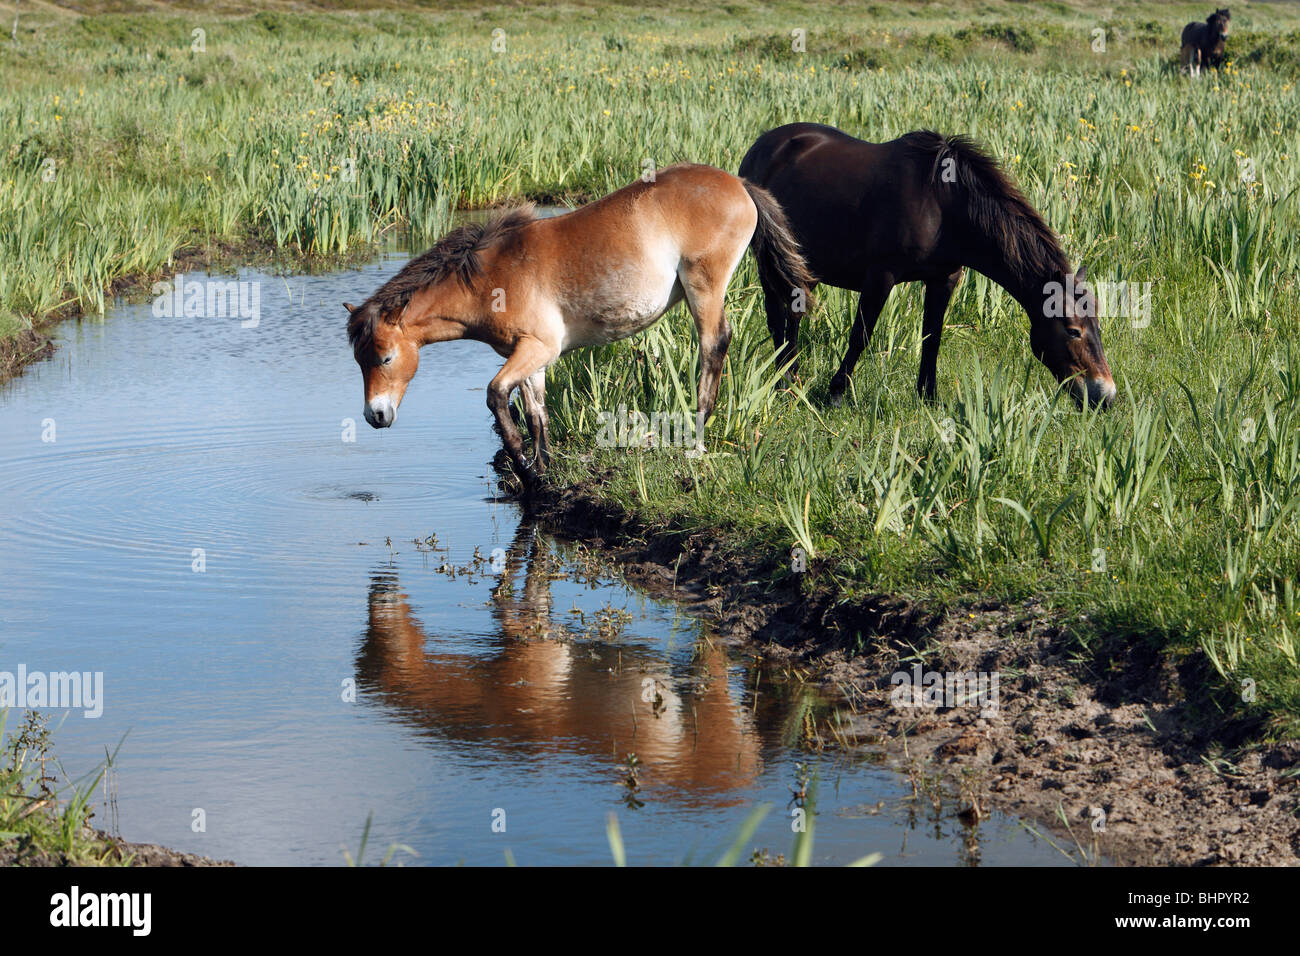 Exmoor Pony, due mares accanto all acqua, De Bollekamer dune di sabbia del parco nazionale, Texel, Olanda Foto Stock